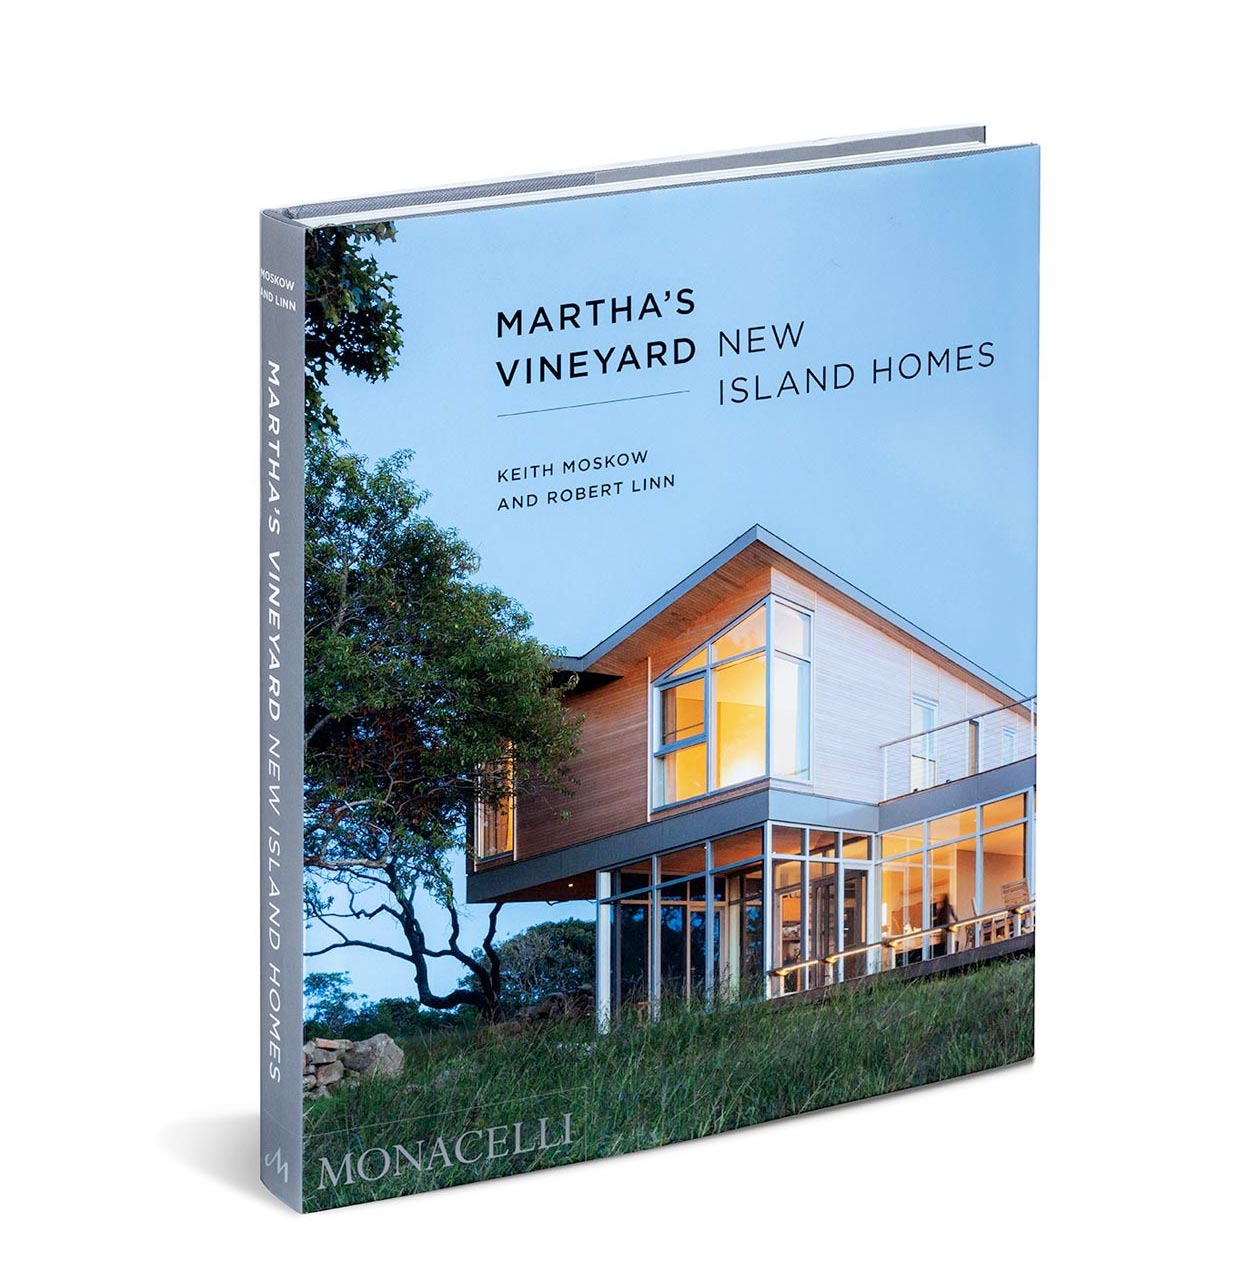 Martha's Vinetard New Island Homes